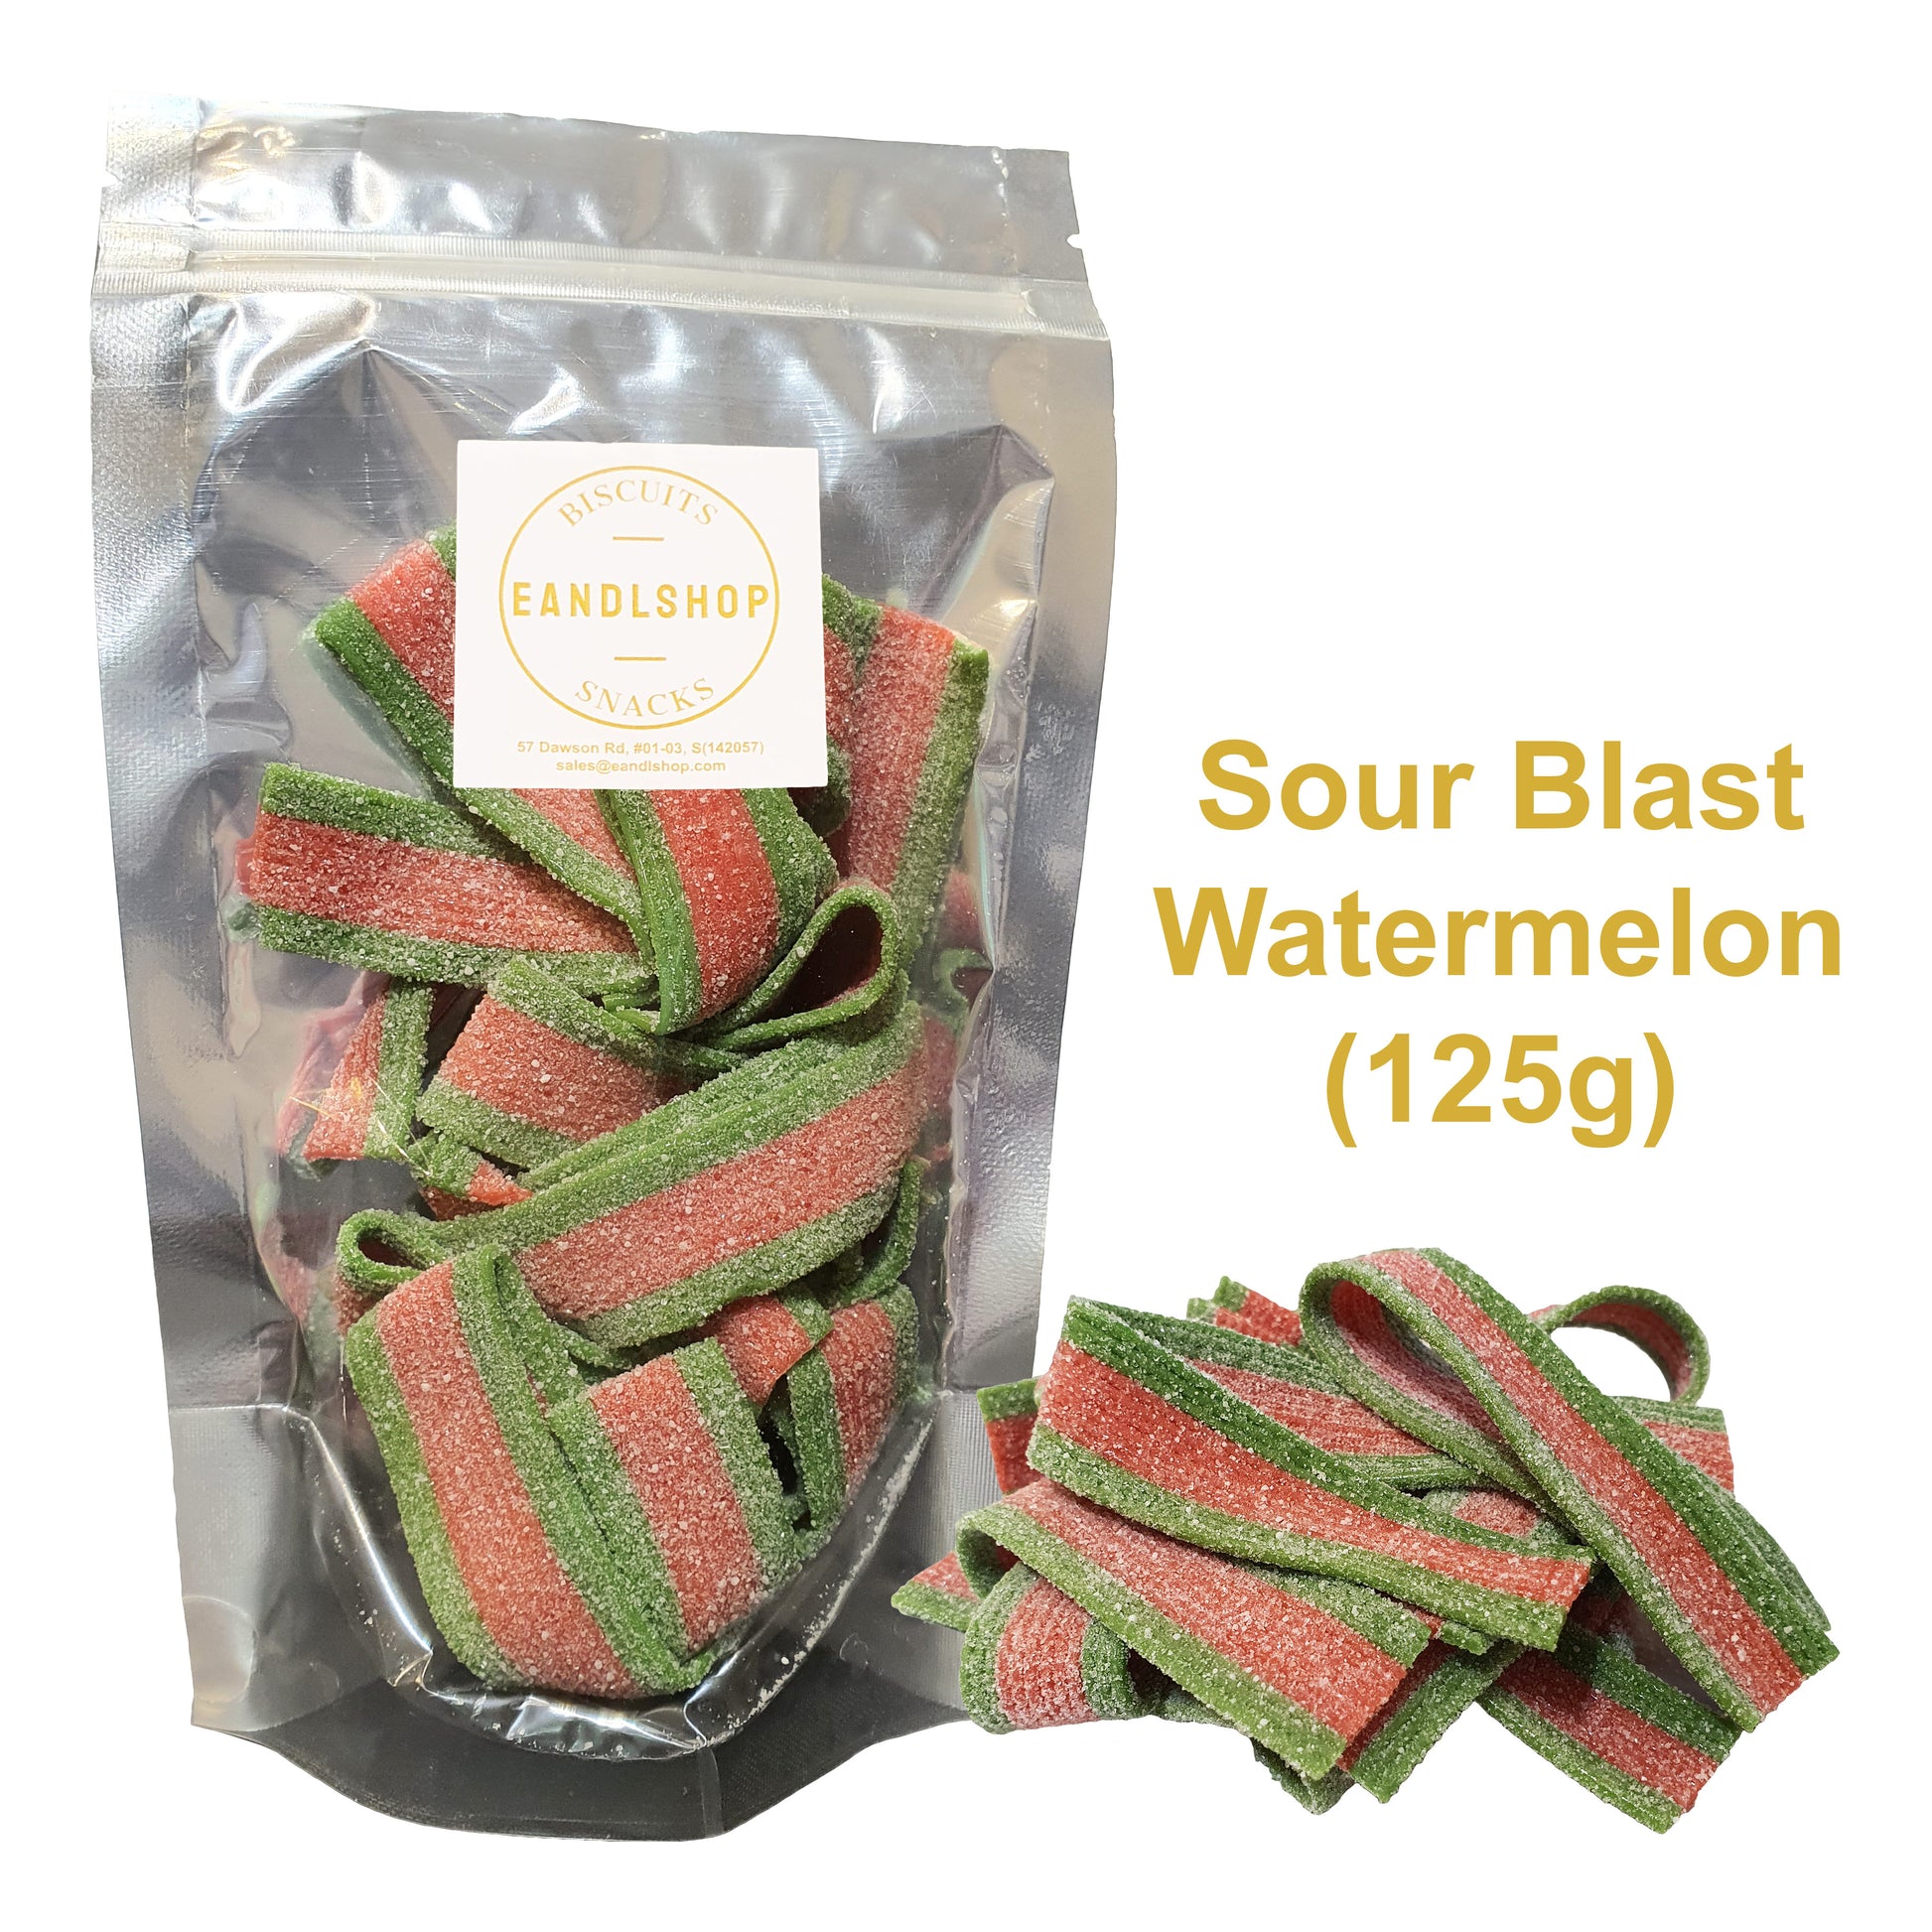 Bebeto sour blast (sour blast watermelon). Old-school biscuits, modern snacks (chips, crackers), cakes, gummies, plums, dried fruits, nuts, herbal tea – available at www.EANDLSHOP.com